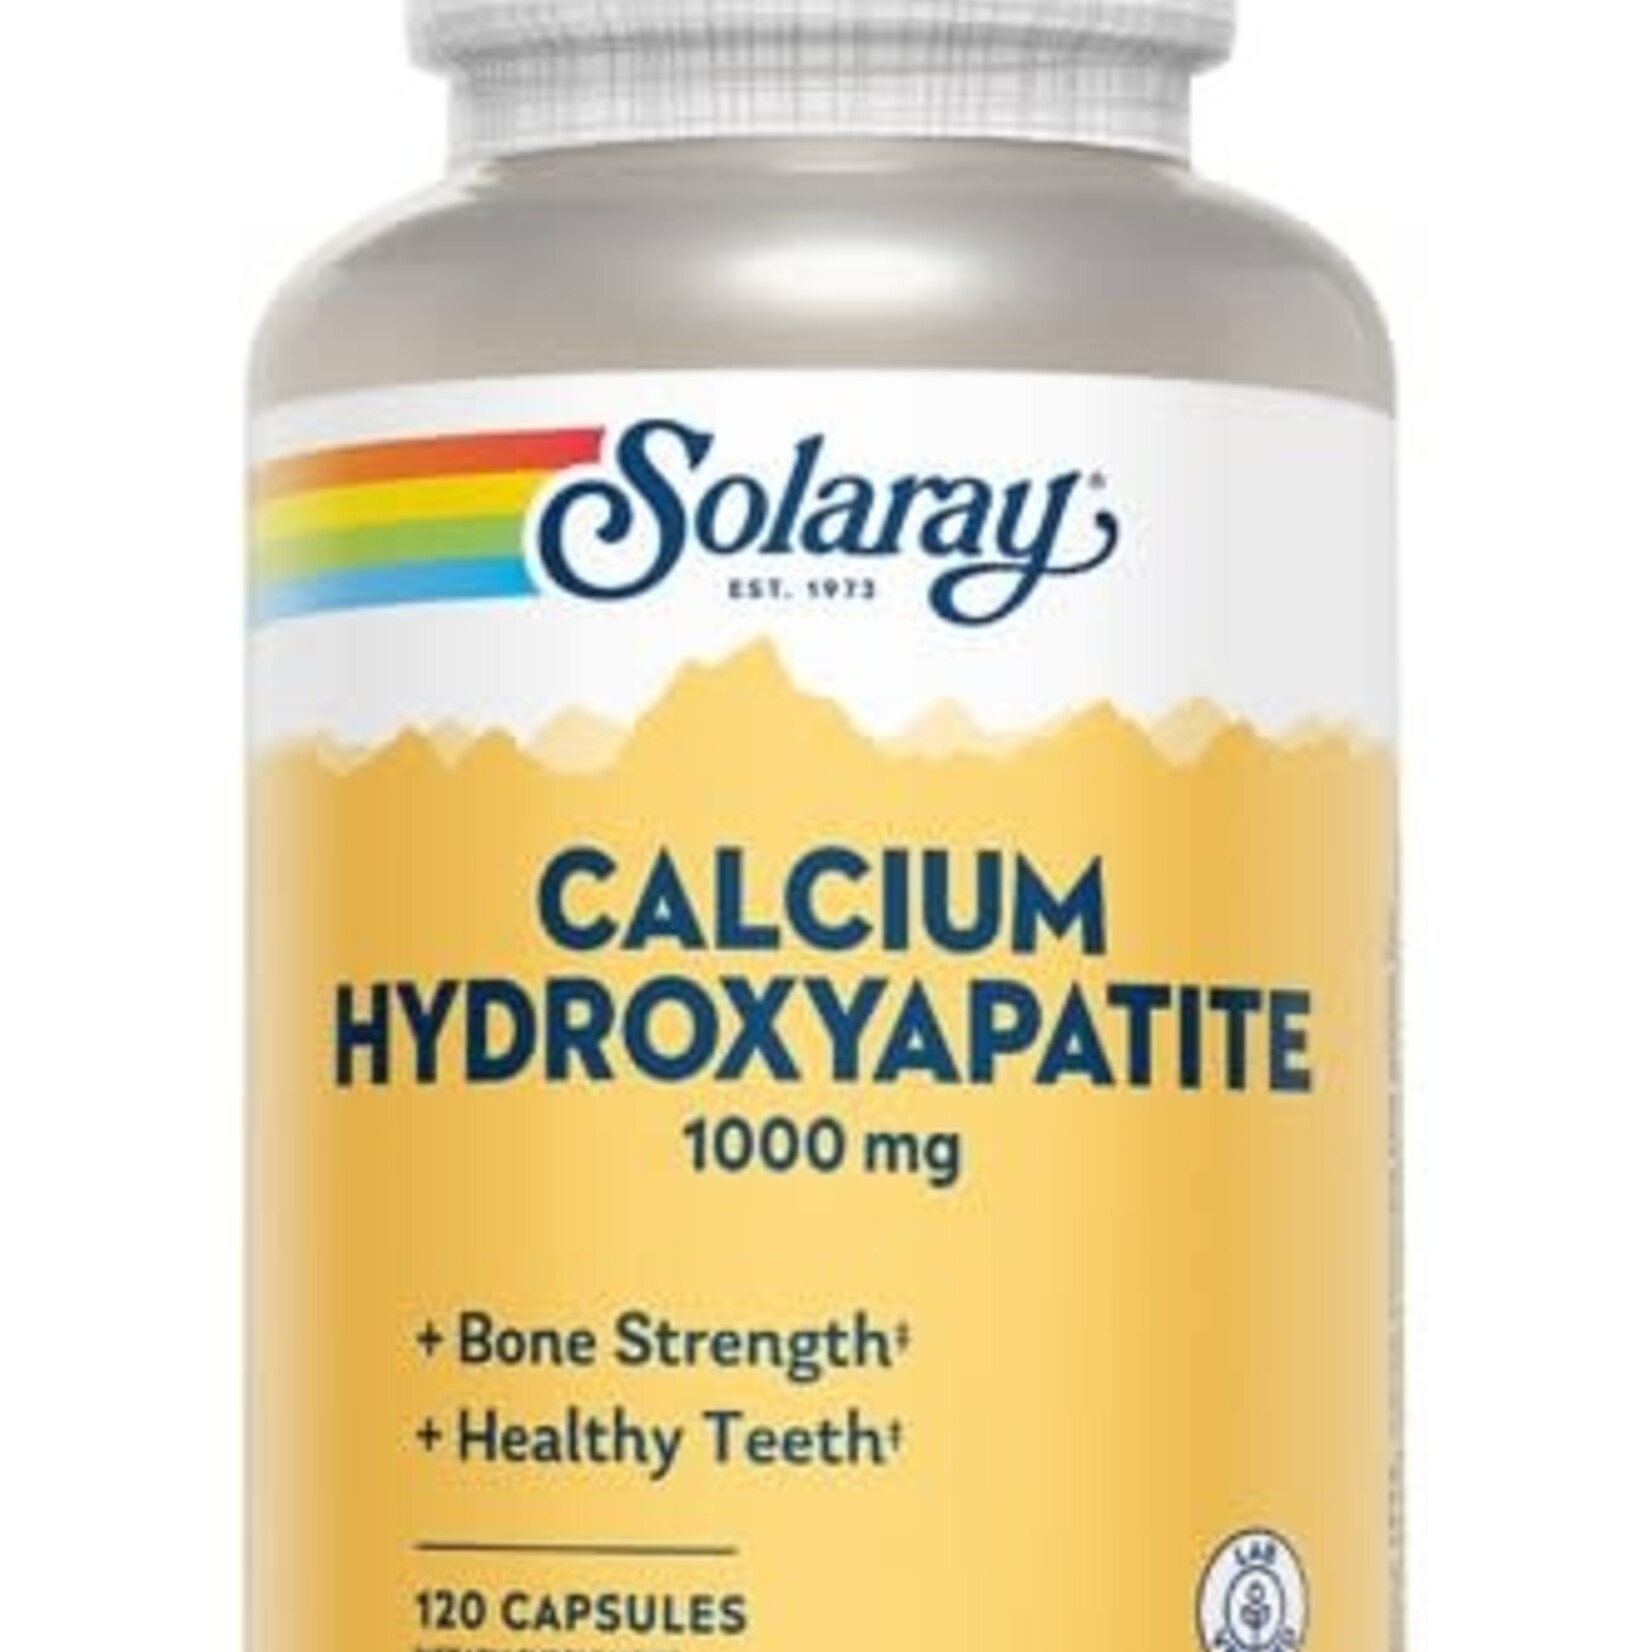 Solaray Calcium Hydroxyapatite, 1000mg 120caps